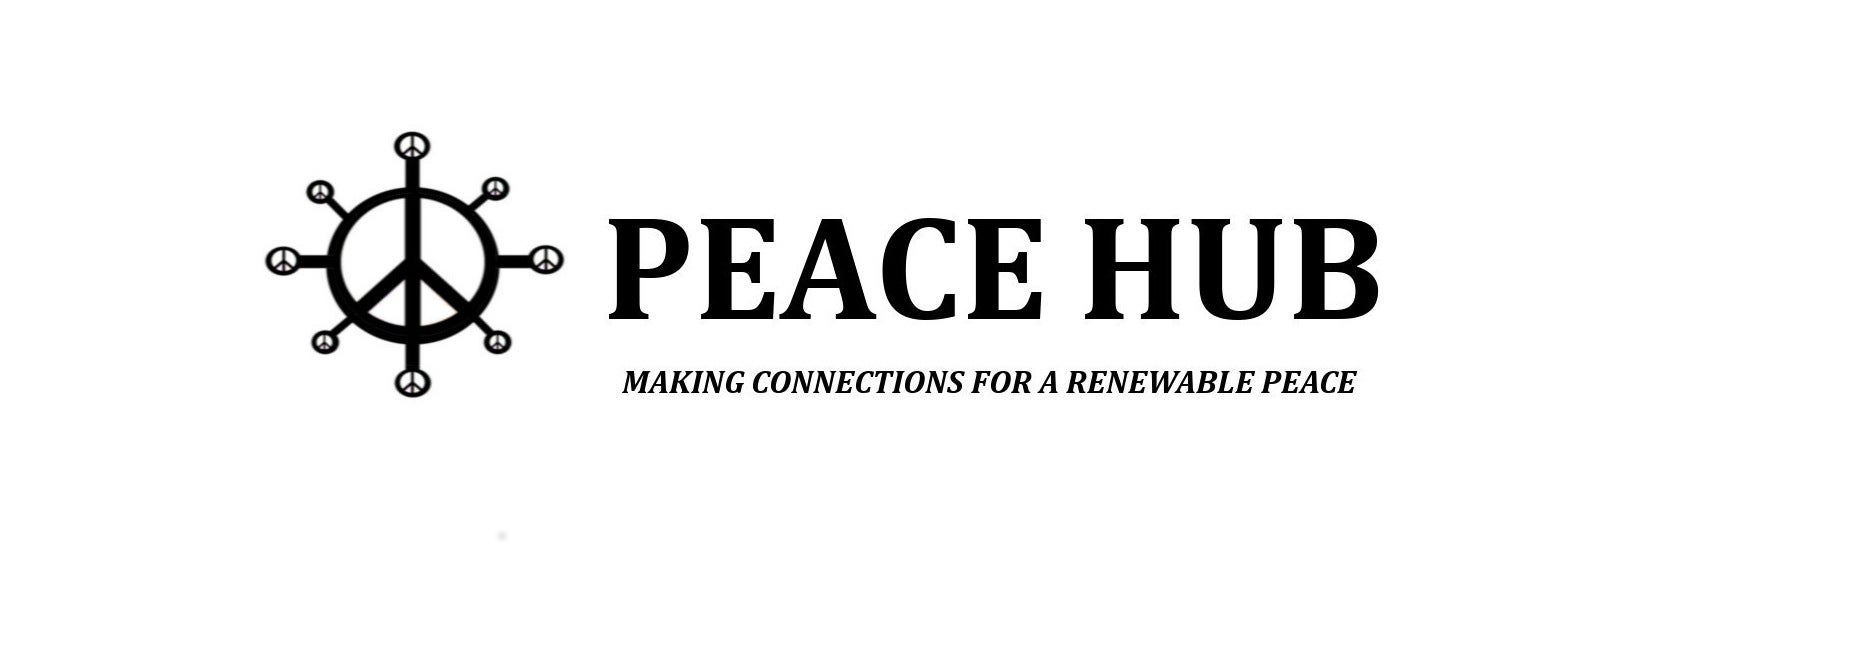 PeaceHUB Logo